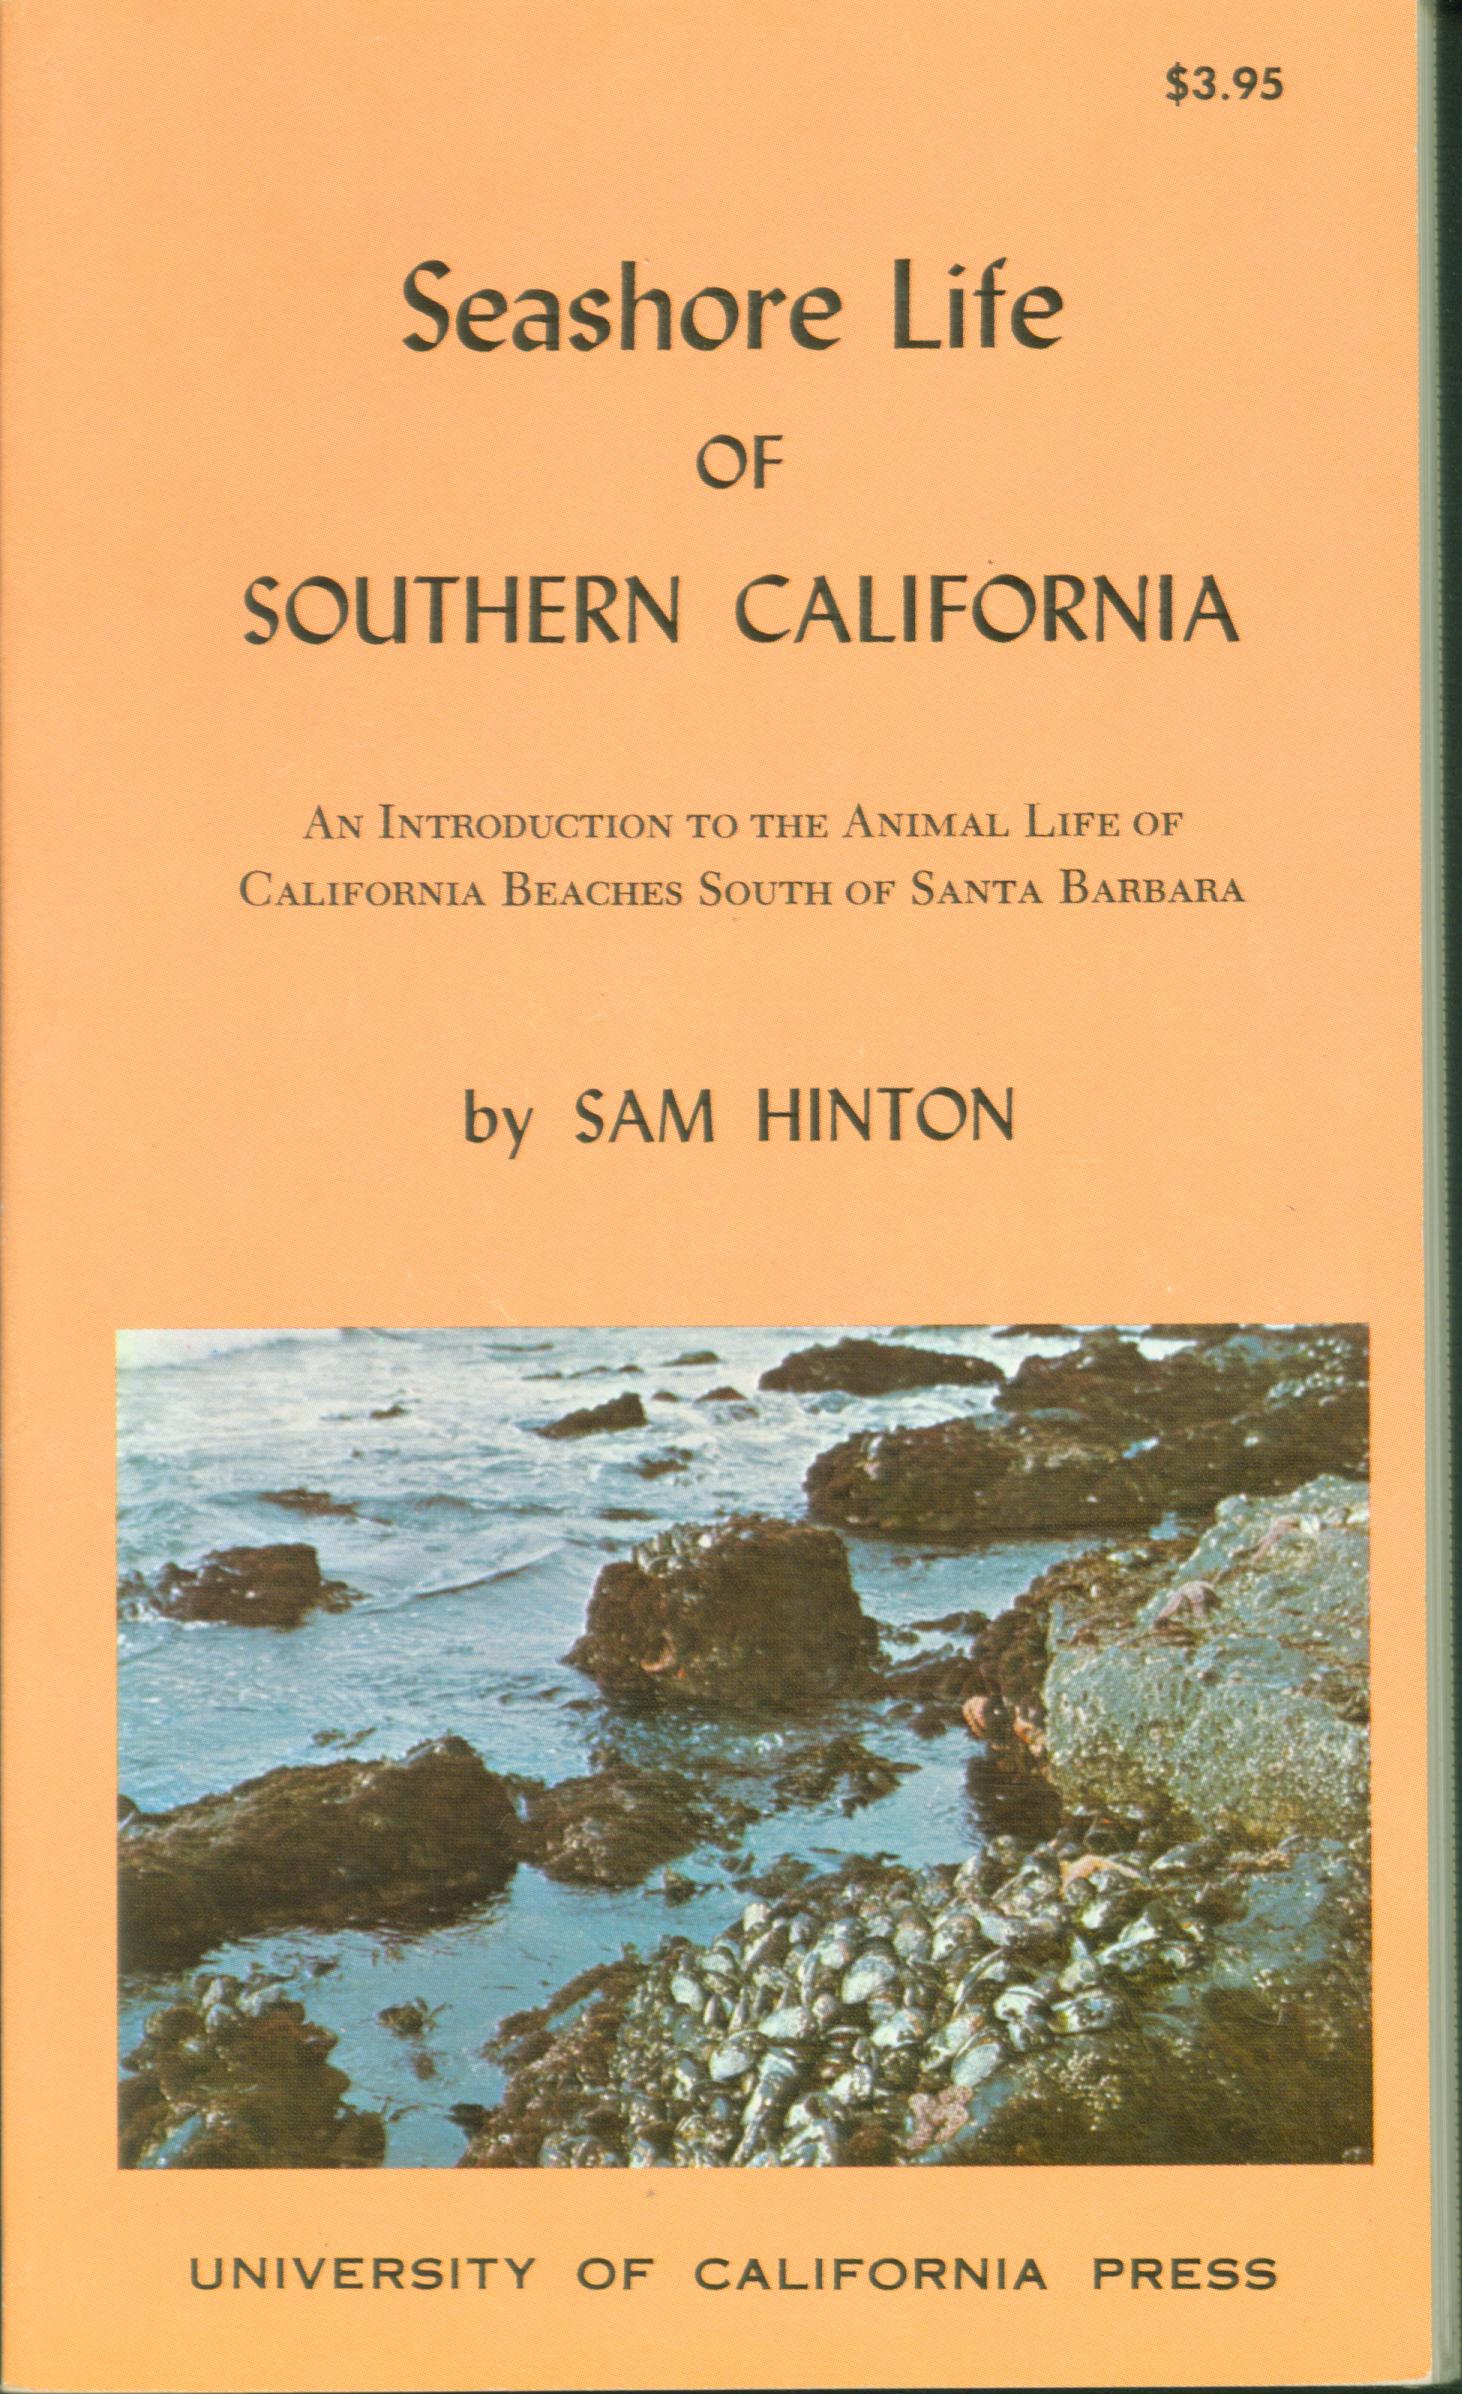 SEASHORE LIFE OF SOUTHERN CALIFORNIA.